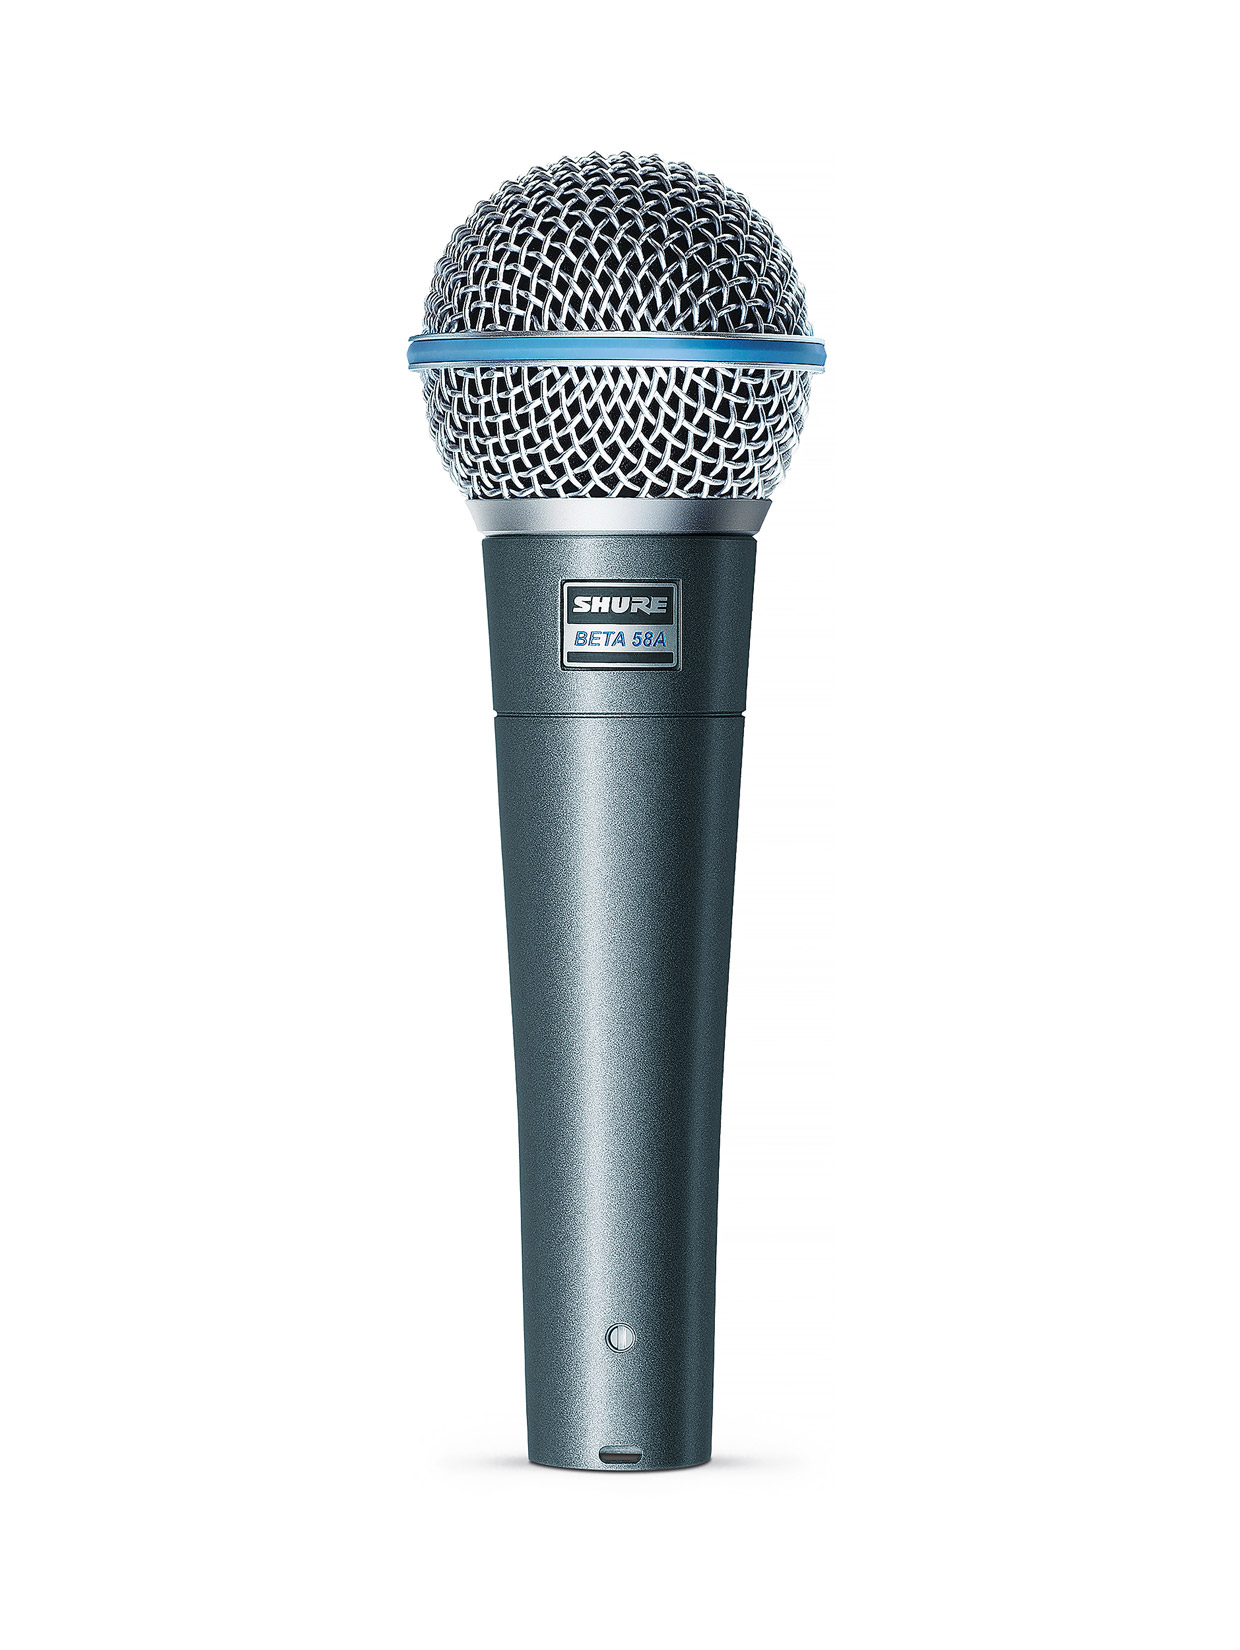 Microfon mono dinamic, supercardioid, pop-filtru, 150 ohmi, 50 hz - 16 khz, -51,5 dbv - pa, design modern/compact, culoare gri